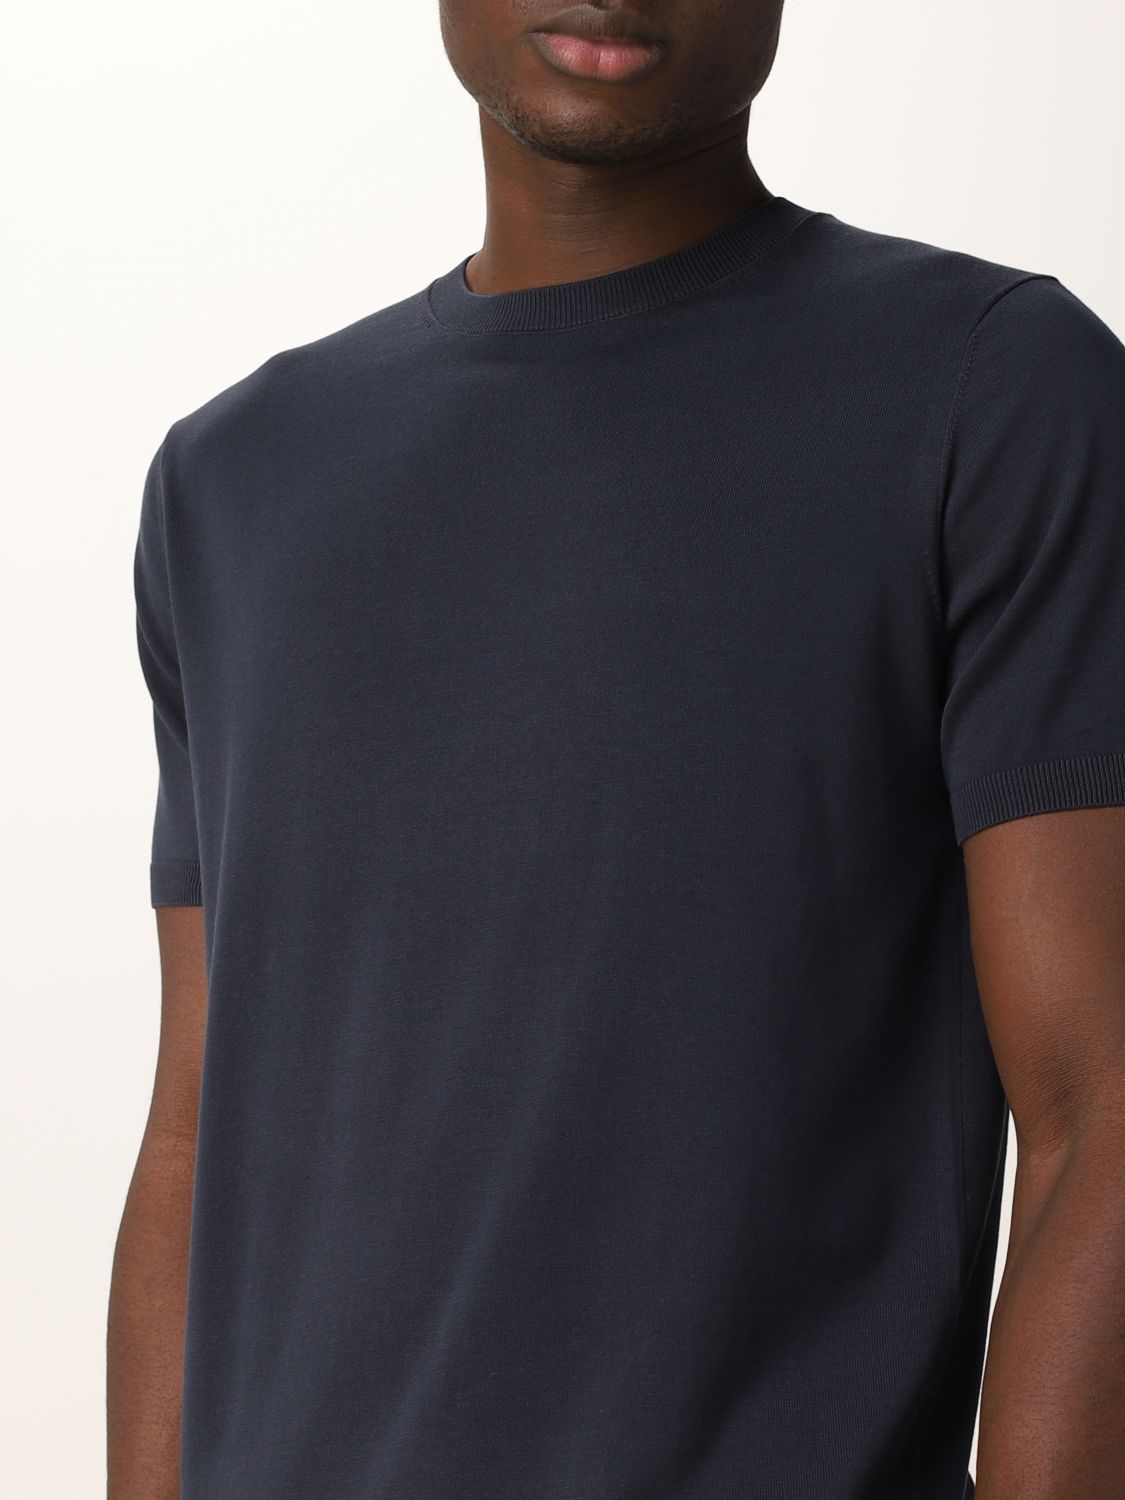 T-Shirt Aspesi: Aspesi Herren T-Shirt blau 3